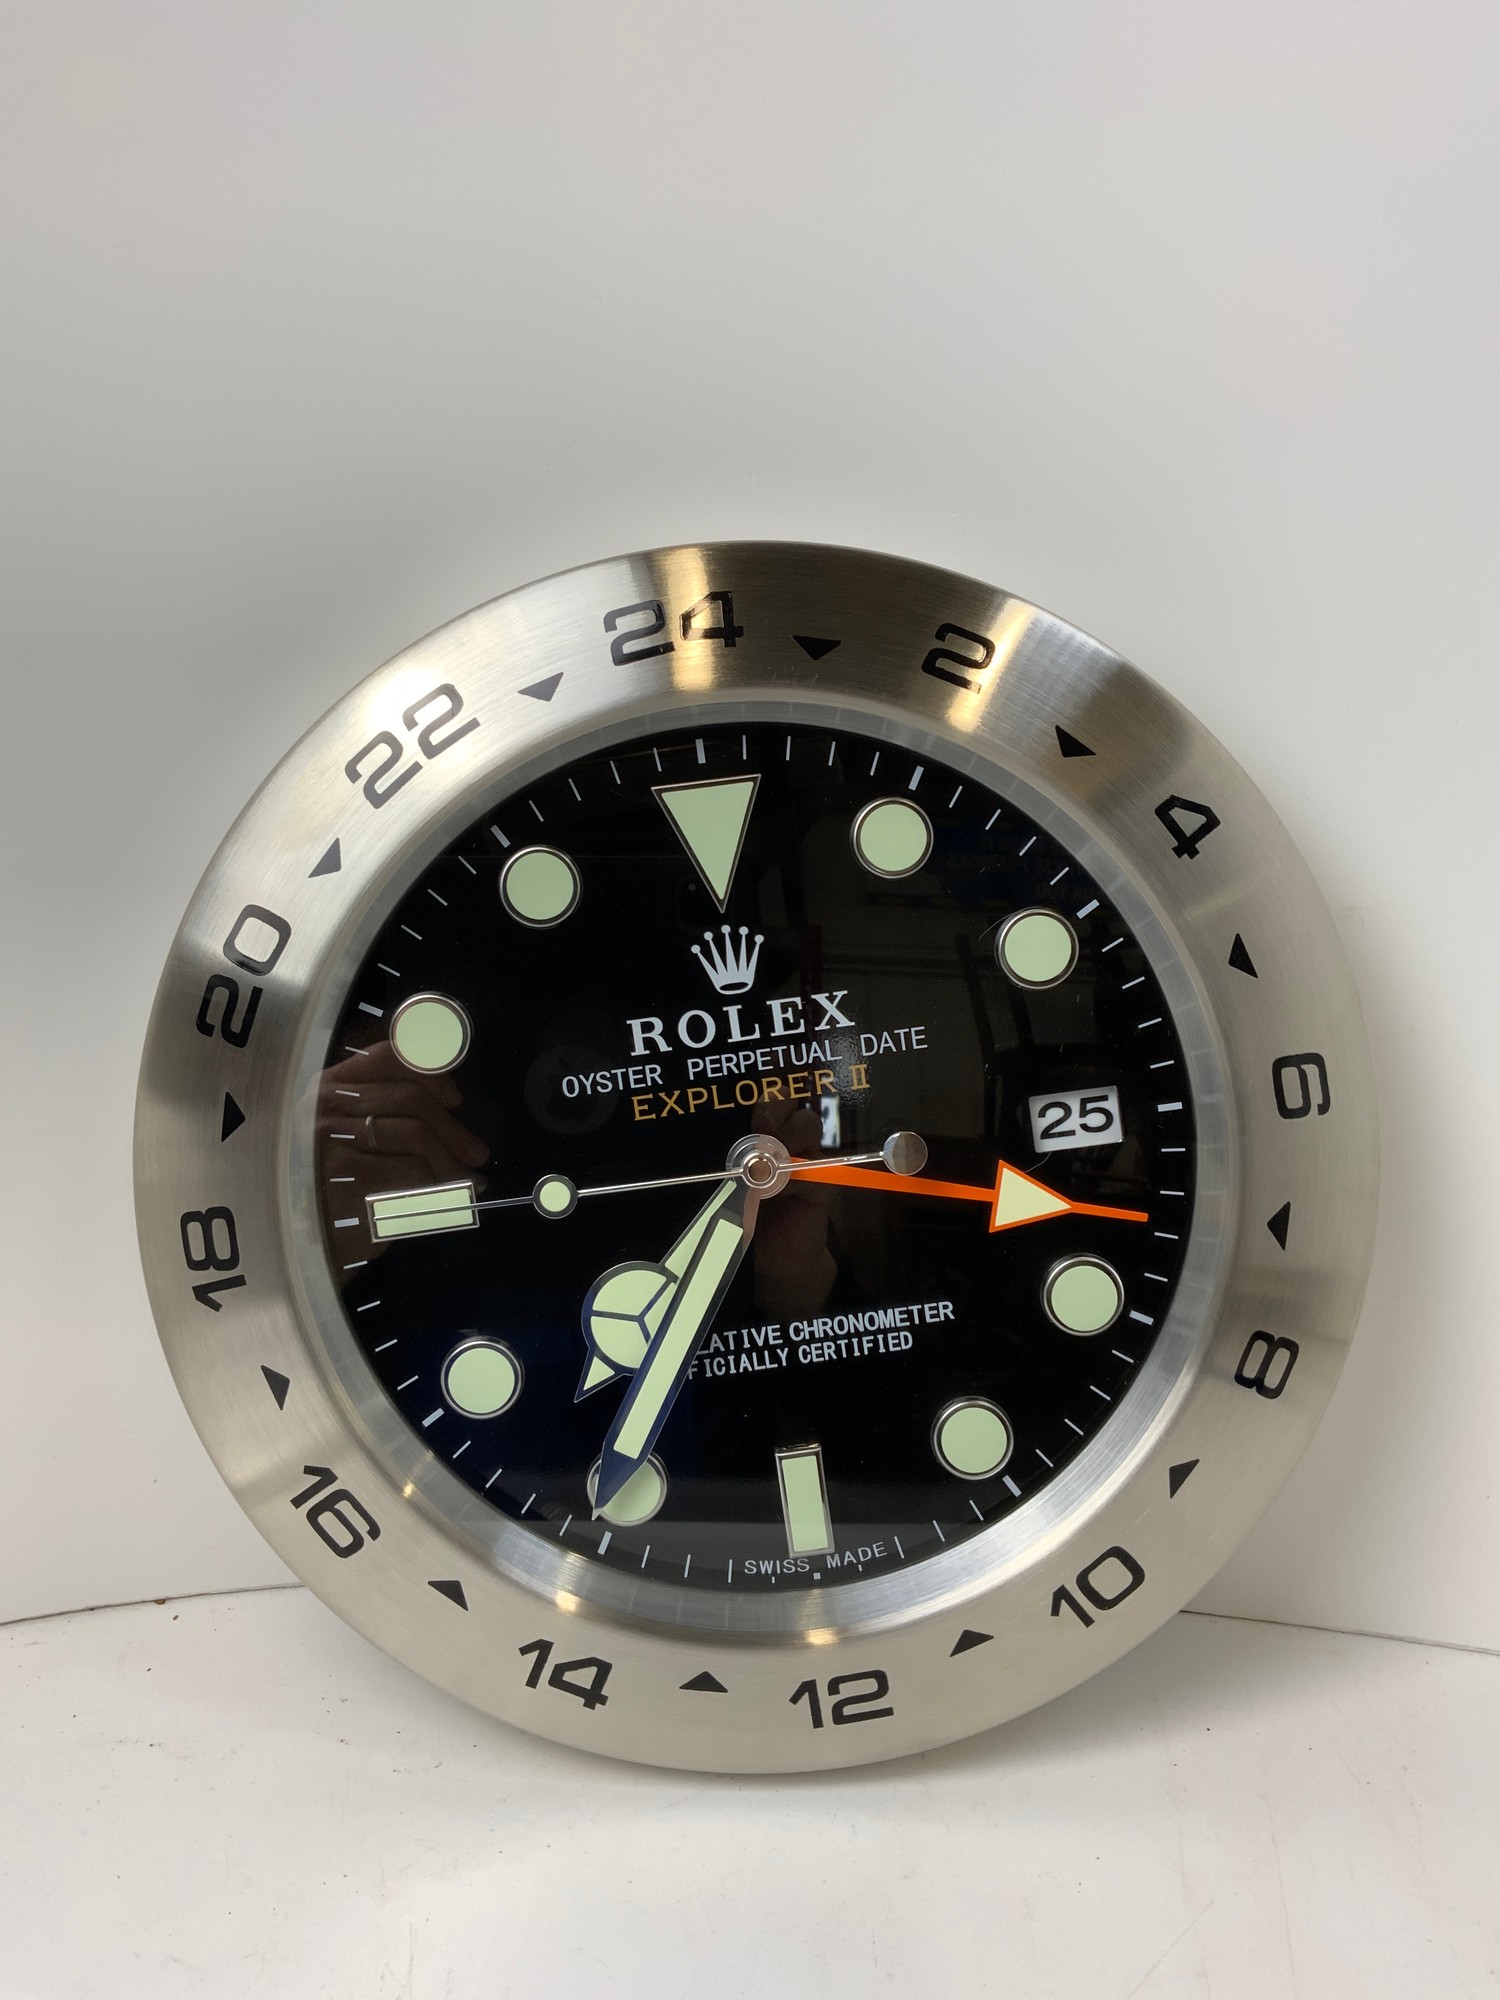 Rolex Dealer Display Clock Oyster Perpetual Date Explorer